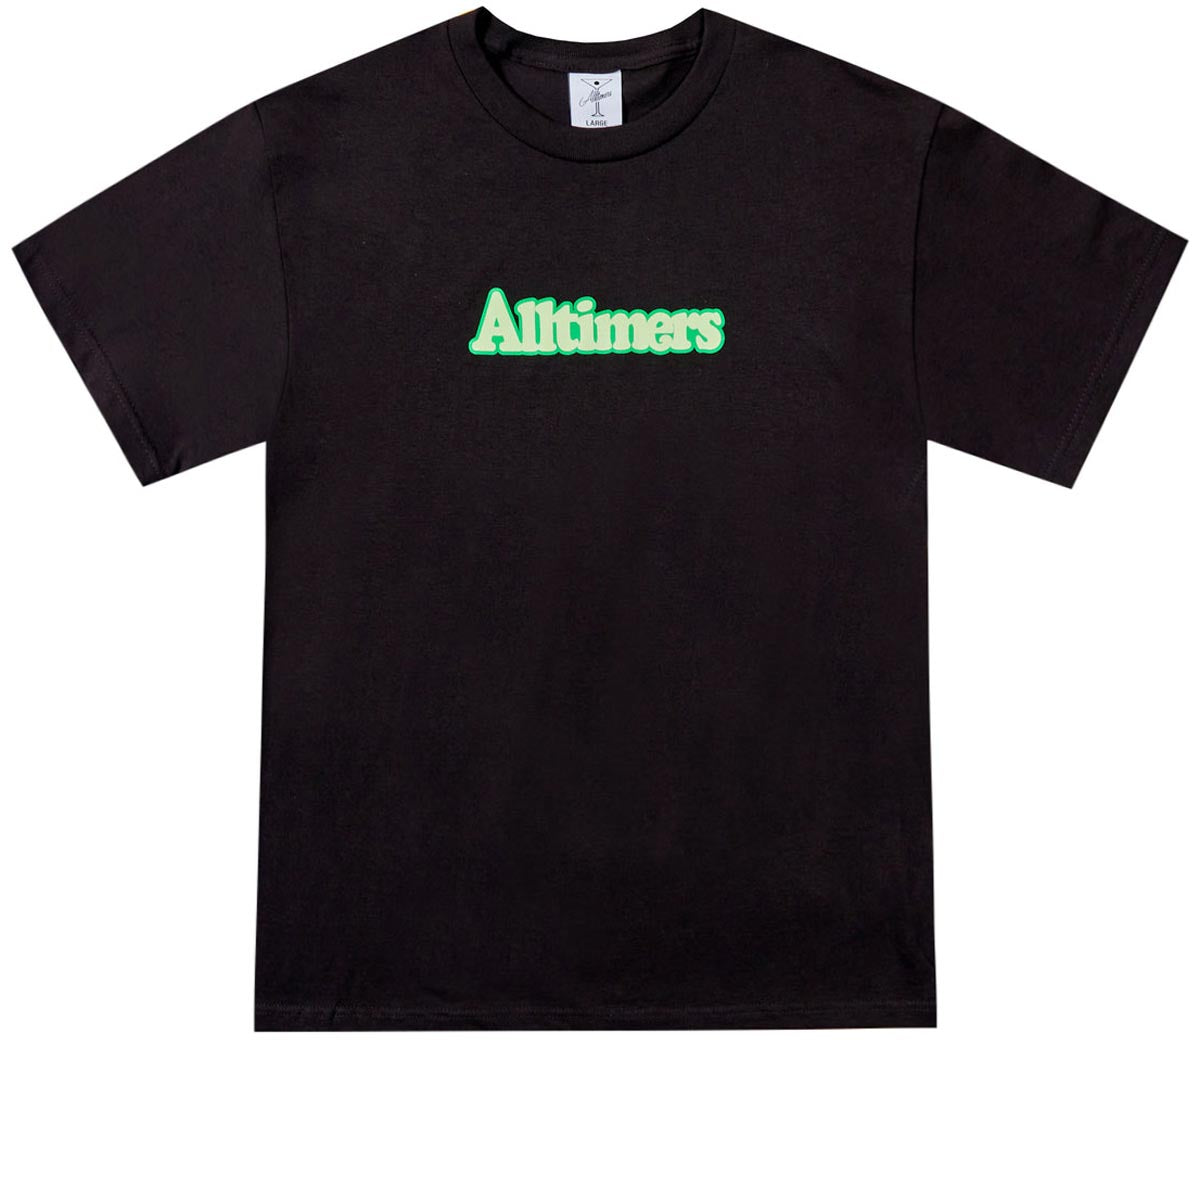 Alltimers Broadway T-Shirt - Black image 1